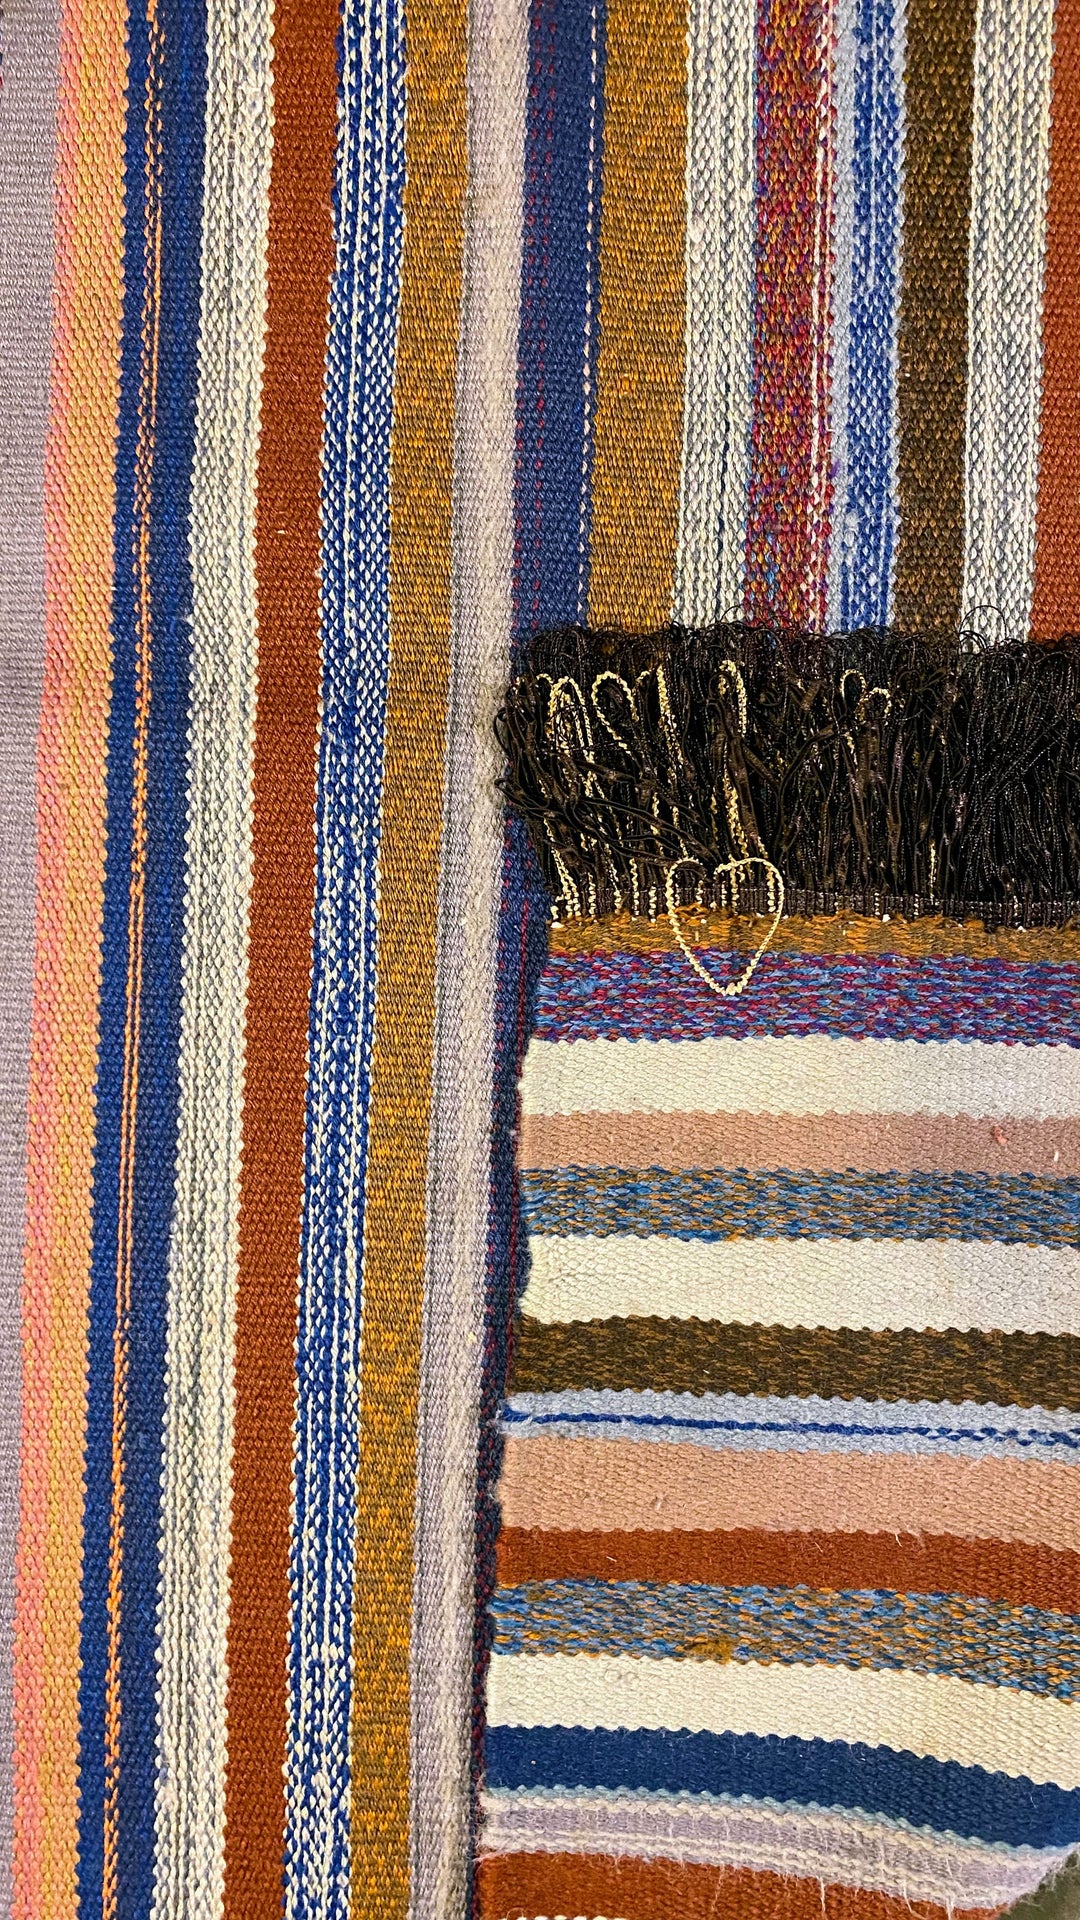 Duocai de - Size: 5.5 x 3.11 - Imam Carpet Co